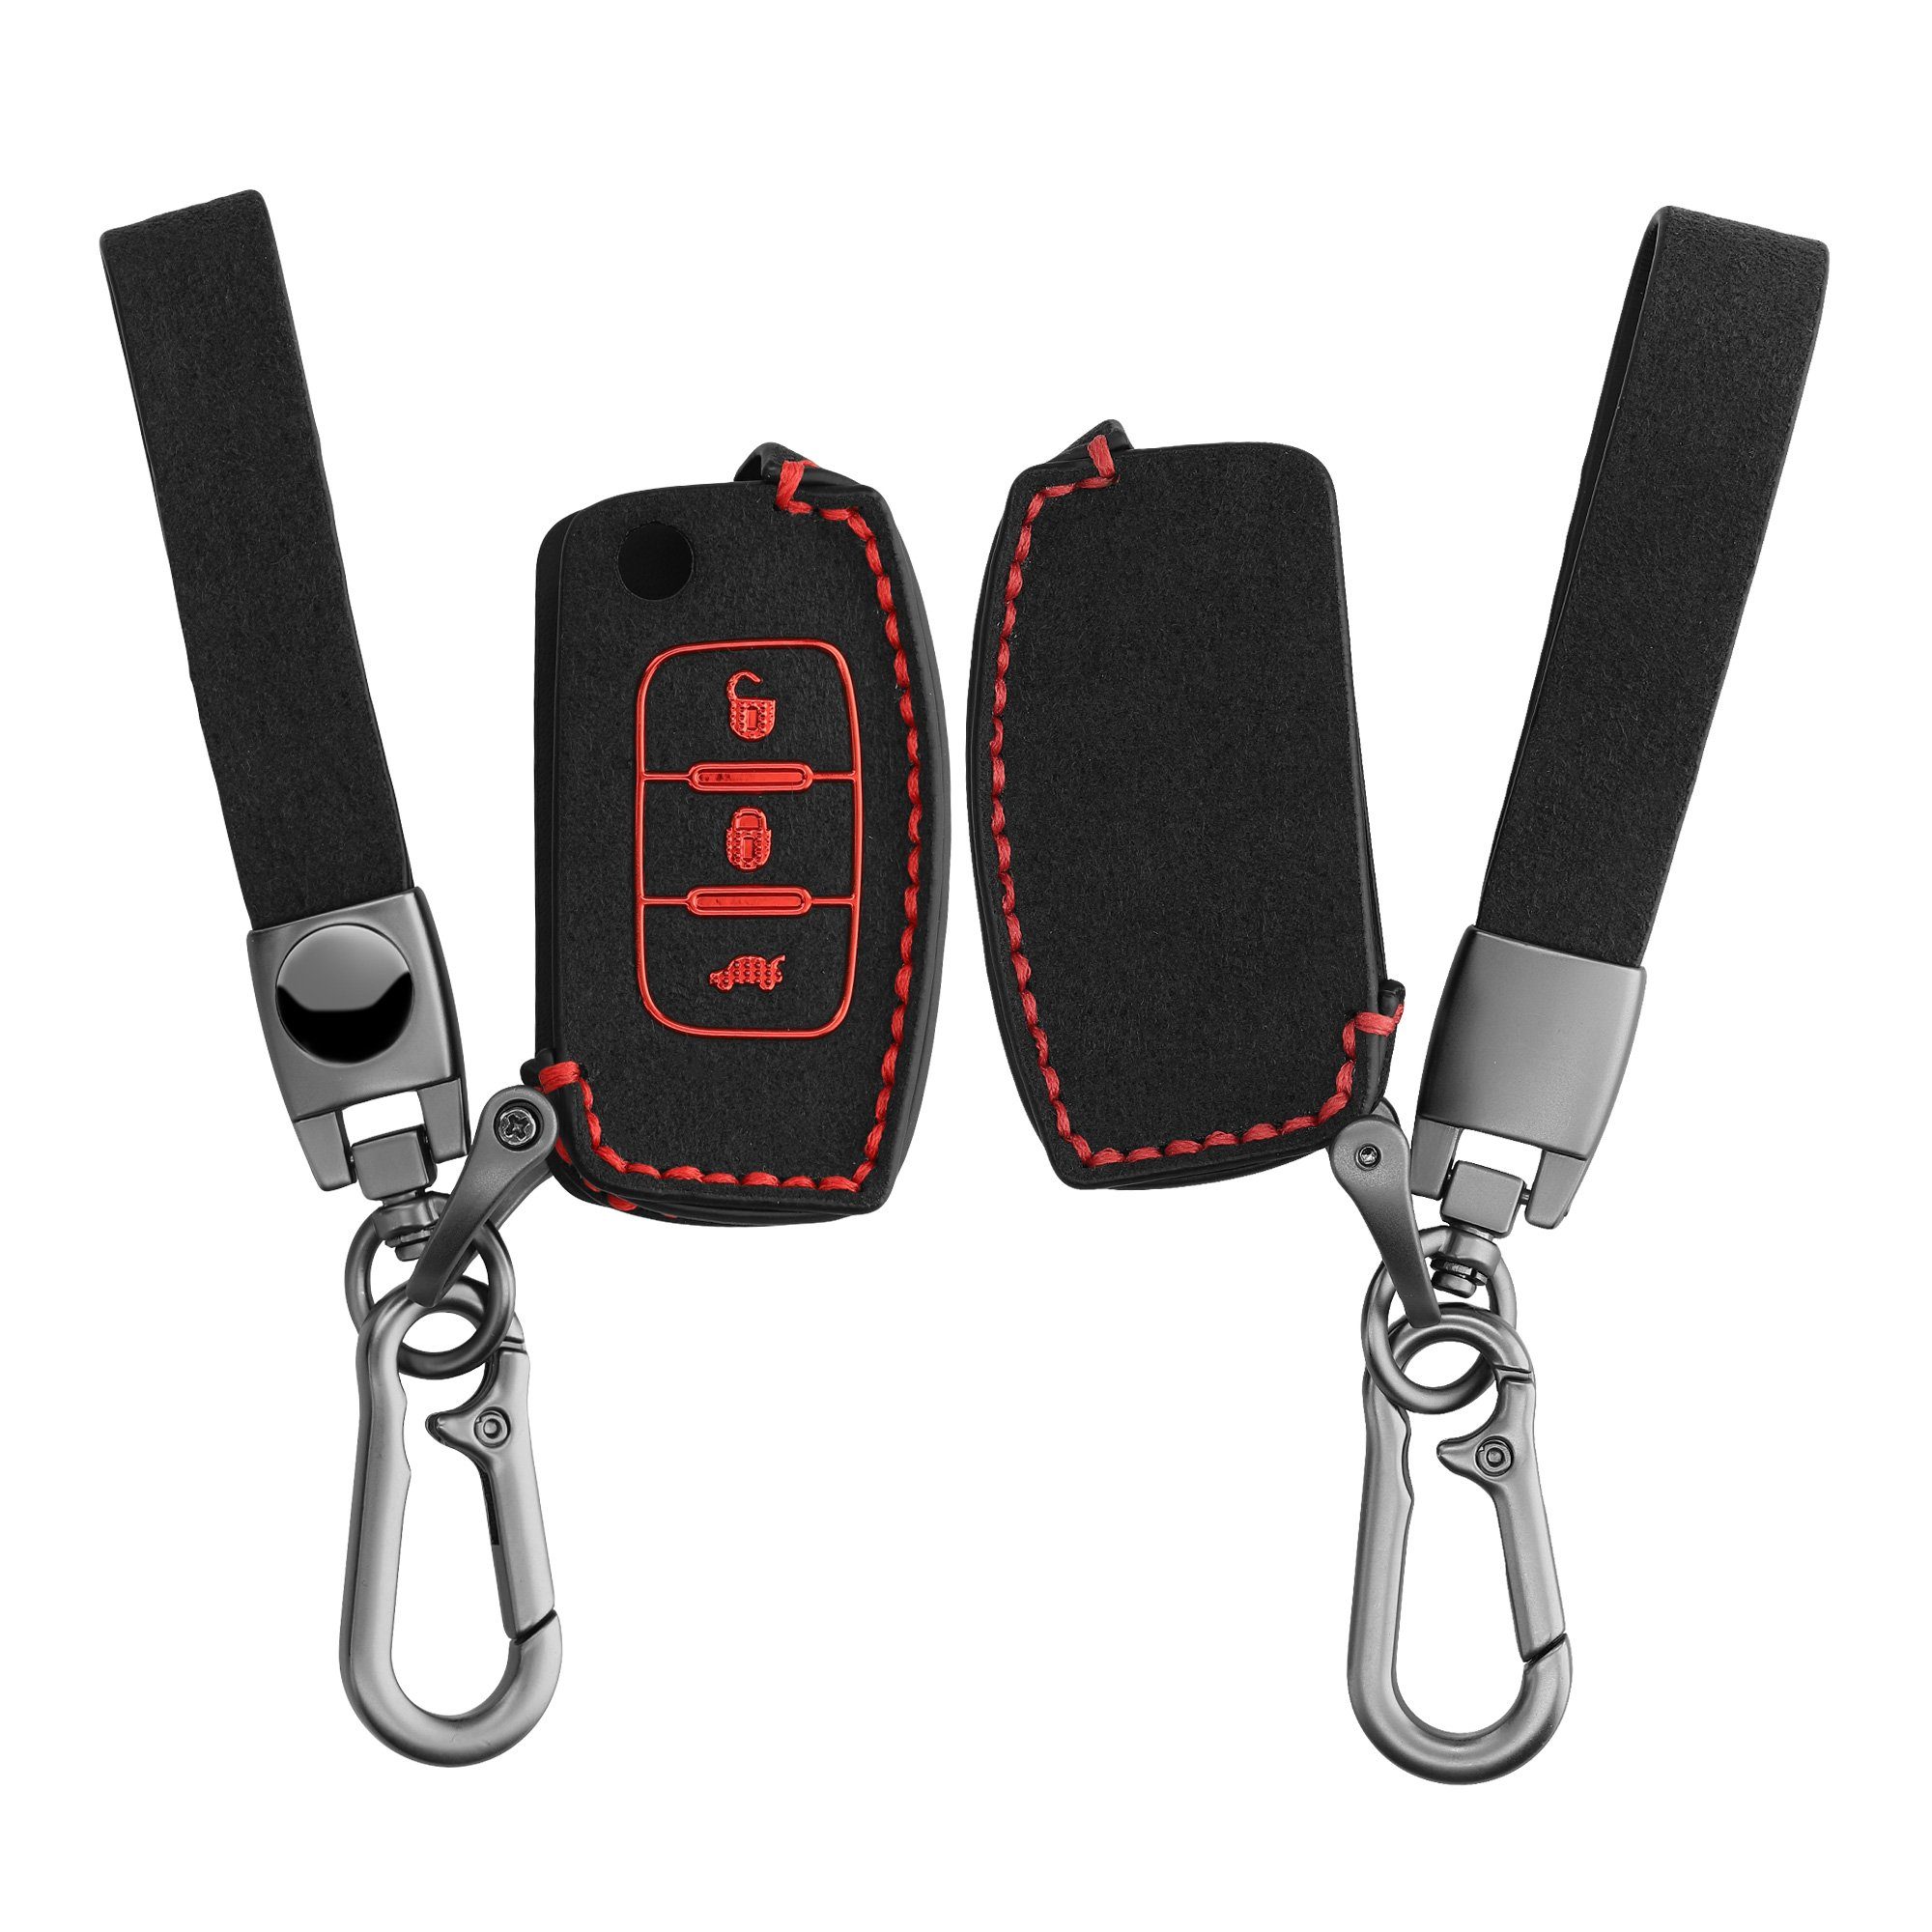 kwmobile Schlüsseltasche, Autoschlüssel Hülle für VW Golf 7 MK7 -  Nubuklederoptik - Kunstleder Schutzhülle Schlüsselhülle Cover für VW Golf 7  MK7